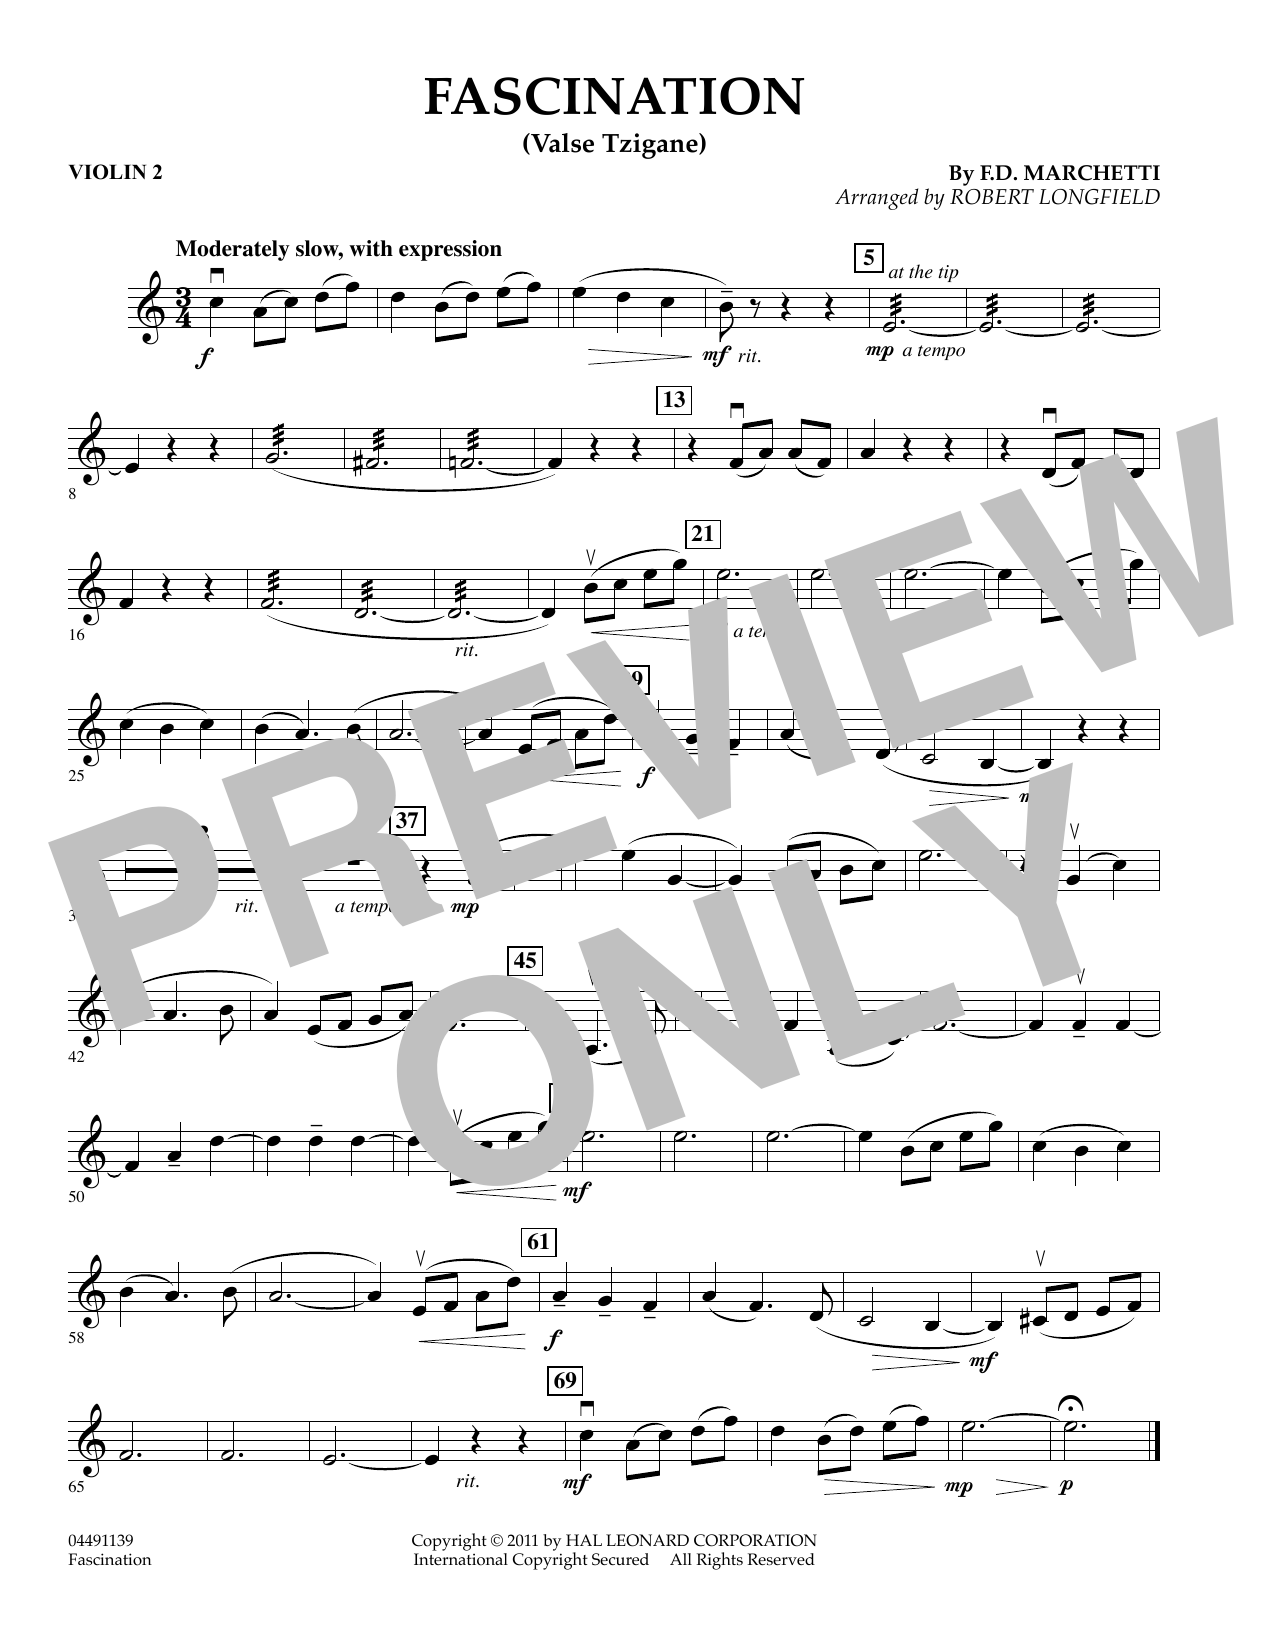 Robert Longfield Fascination (Valse Tzigane) - Violin 2 Sheet Music Notes & Chords for String Quartet - Download or Print PDF